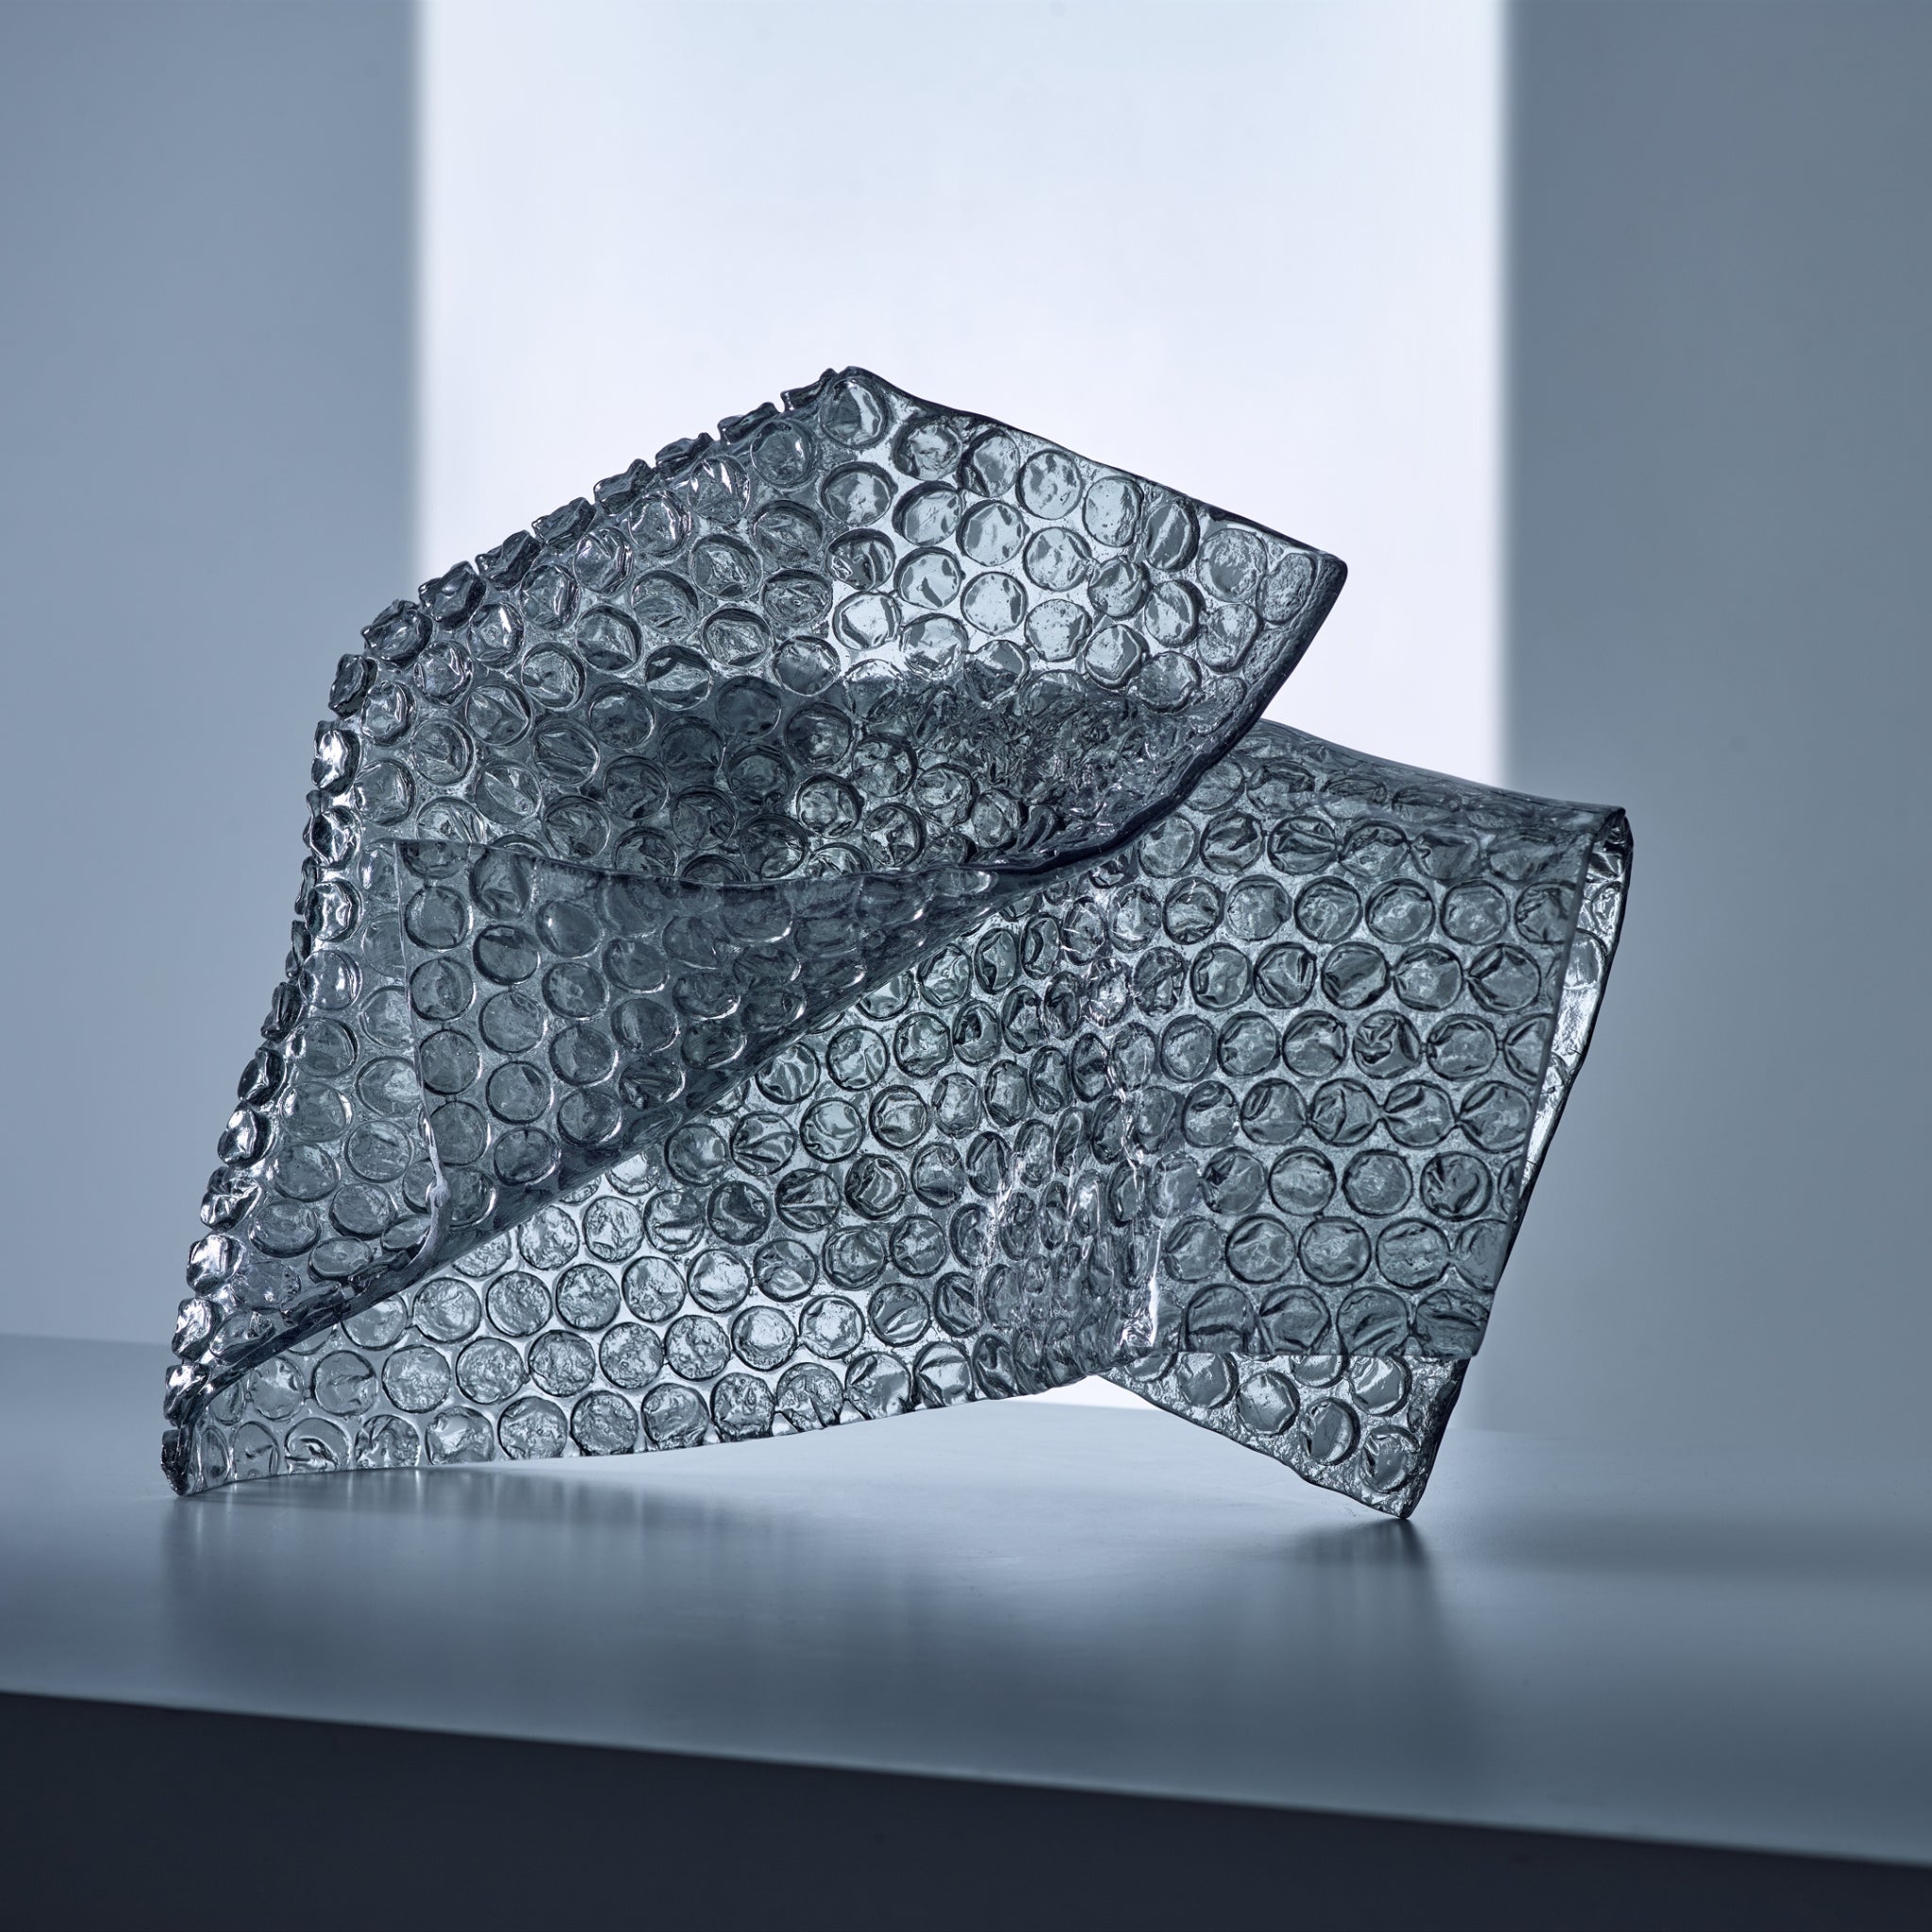 Simon Lewis Wards - Folded Bubble Wrap in Grey